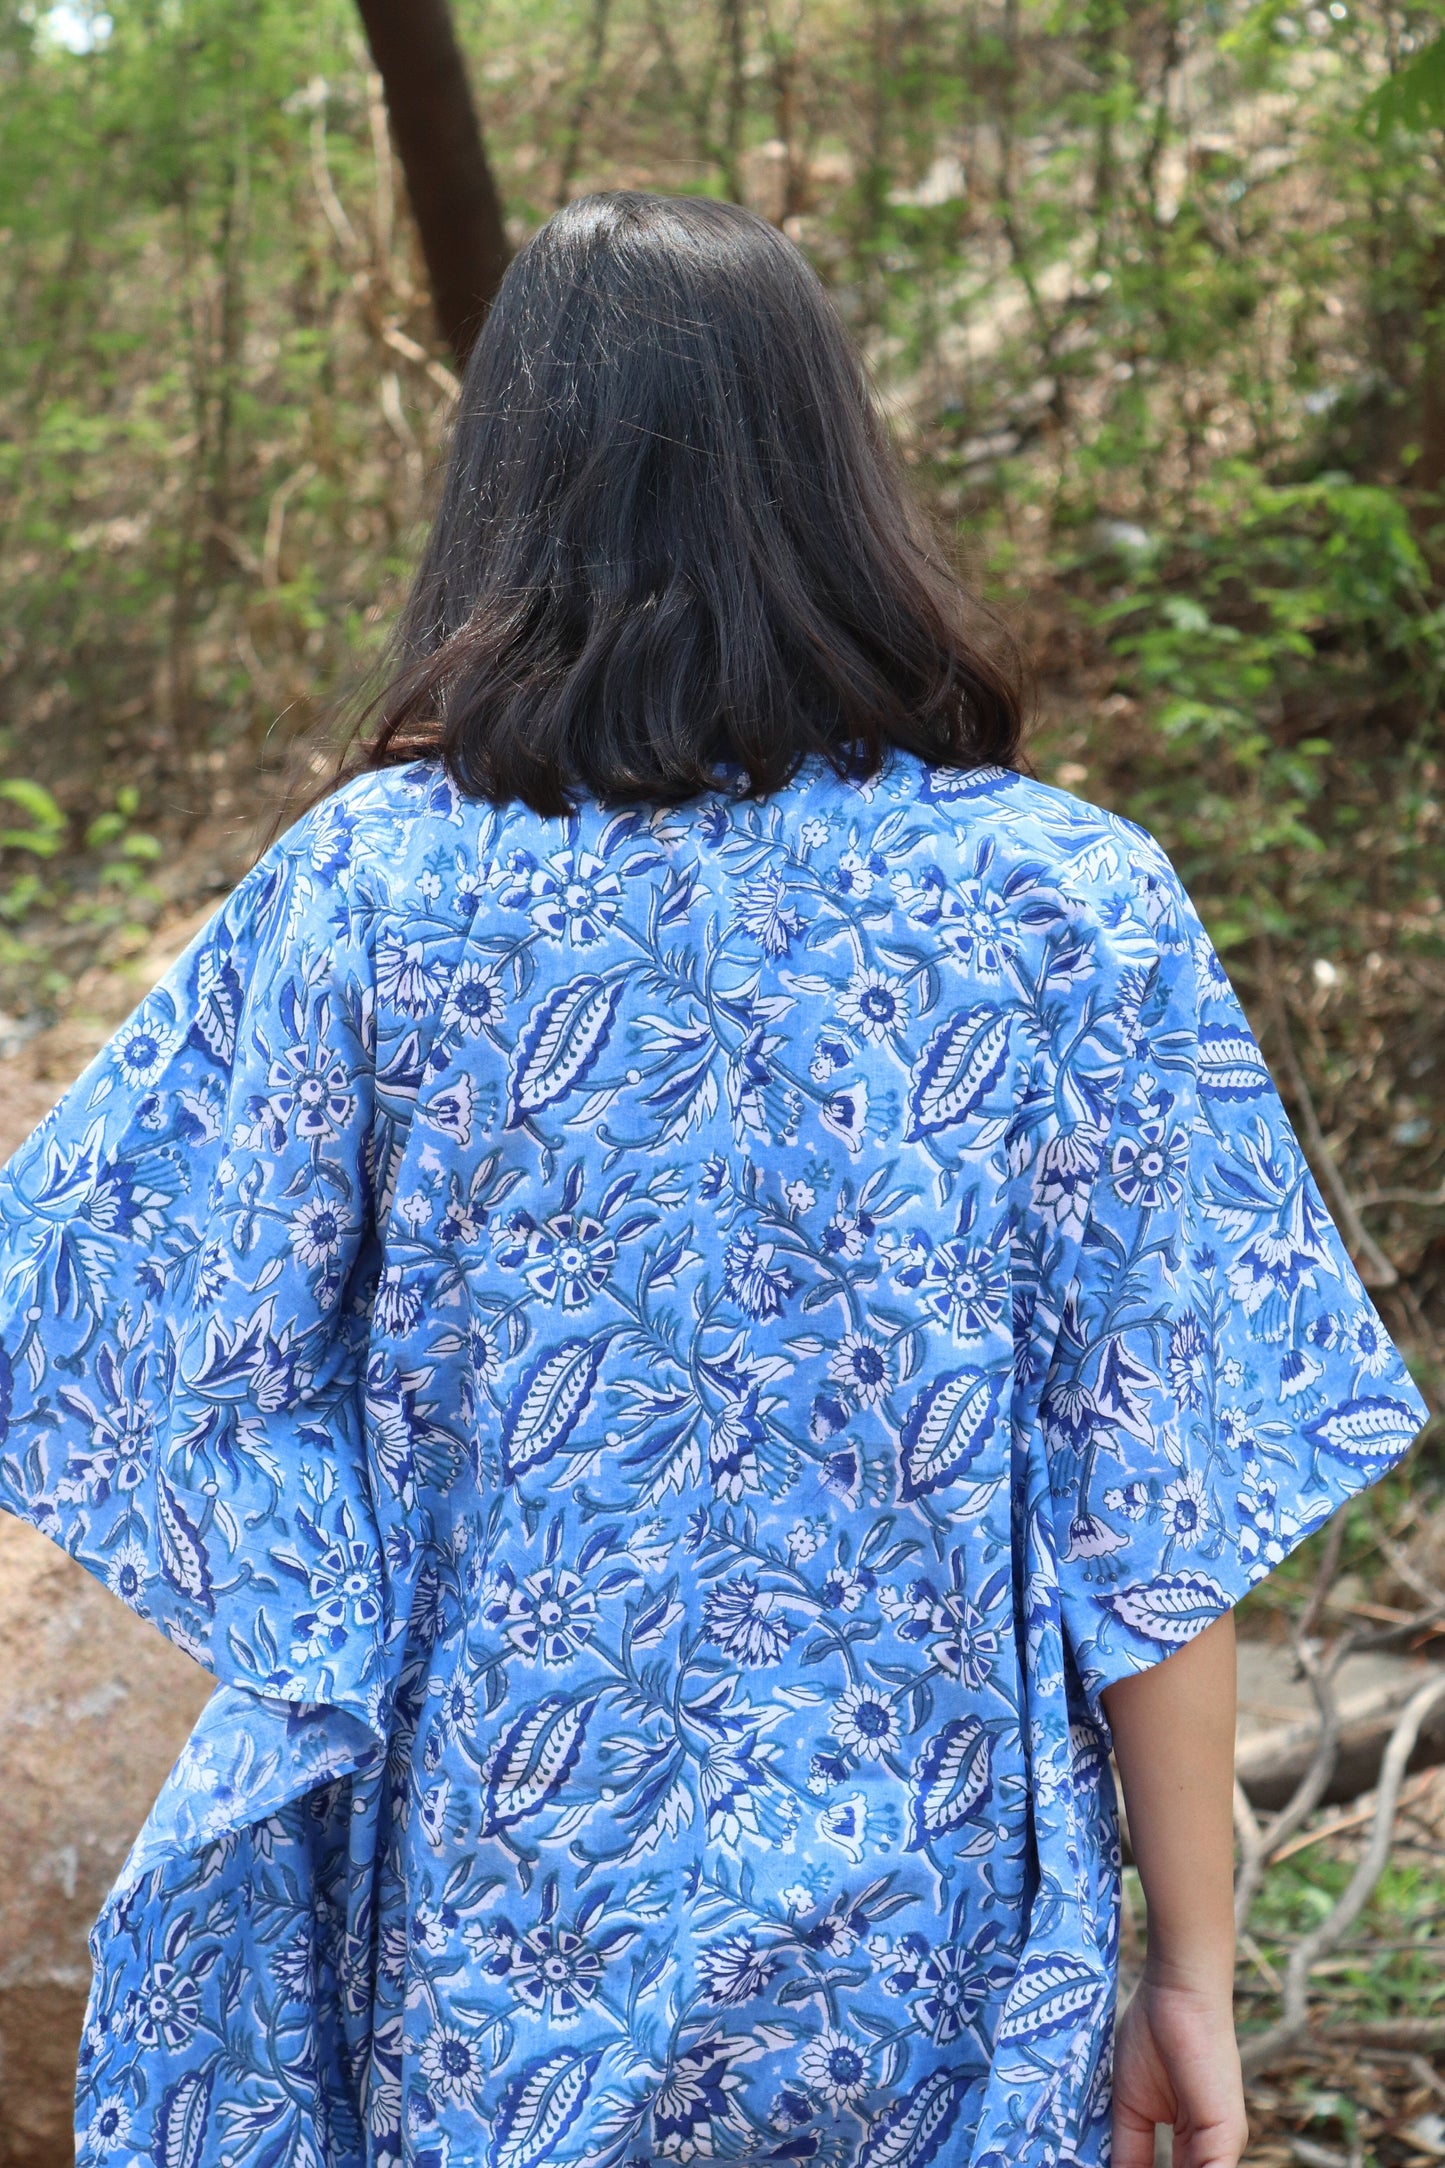 Block print Kaftans for women - Loungewear - Knee length Kaftan - Short Kaftan - Blue floral print